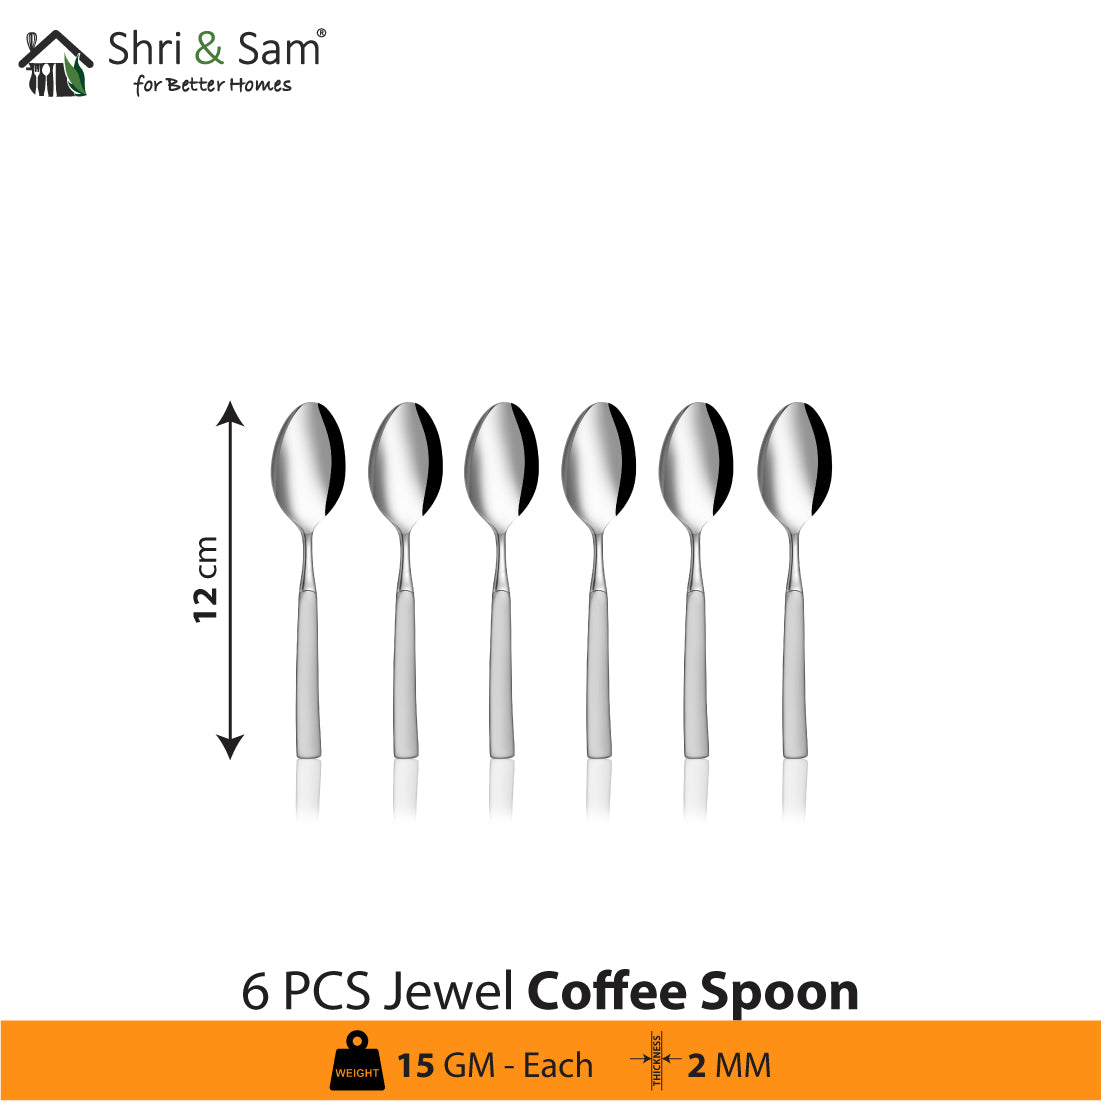 Stainless Steel Cutlery Jewel